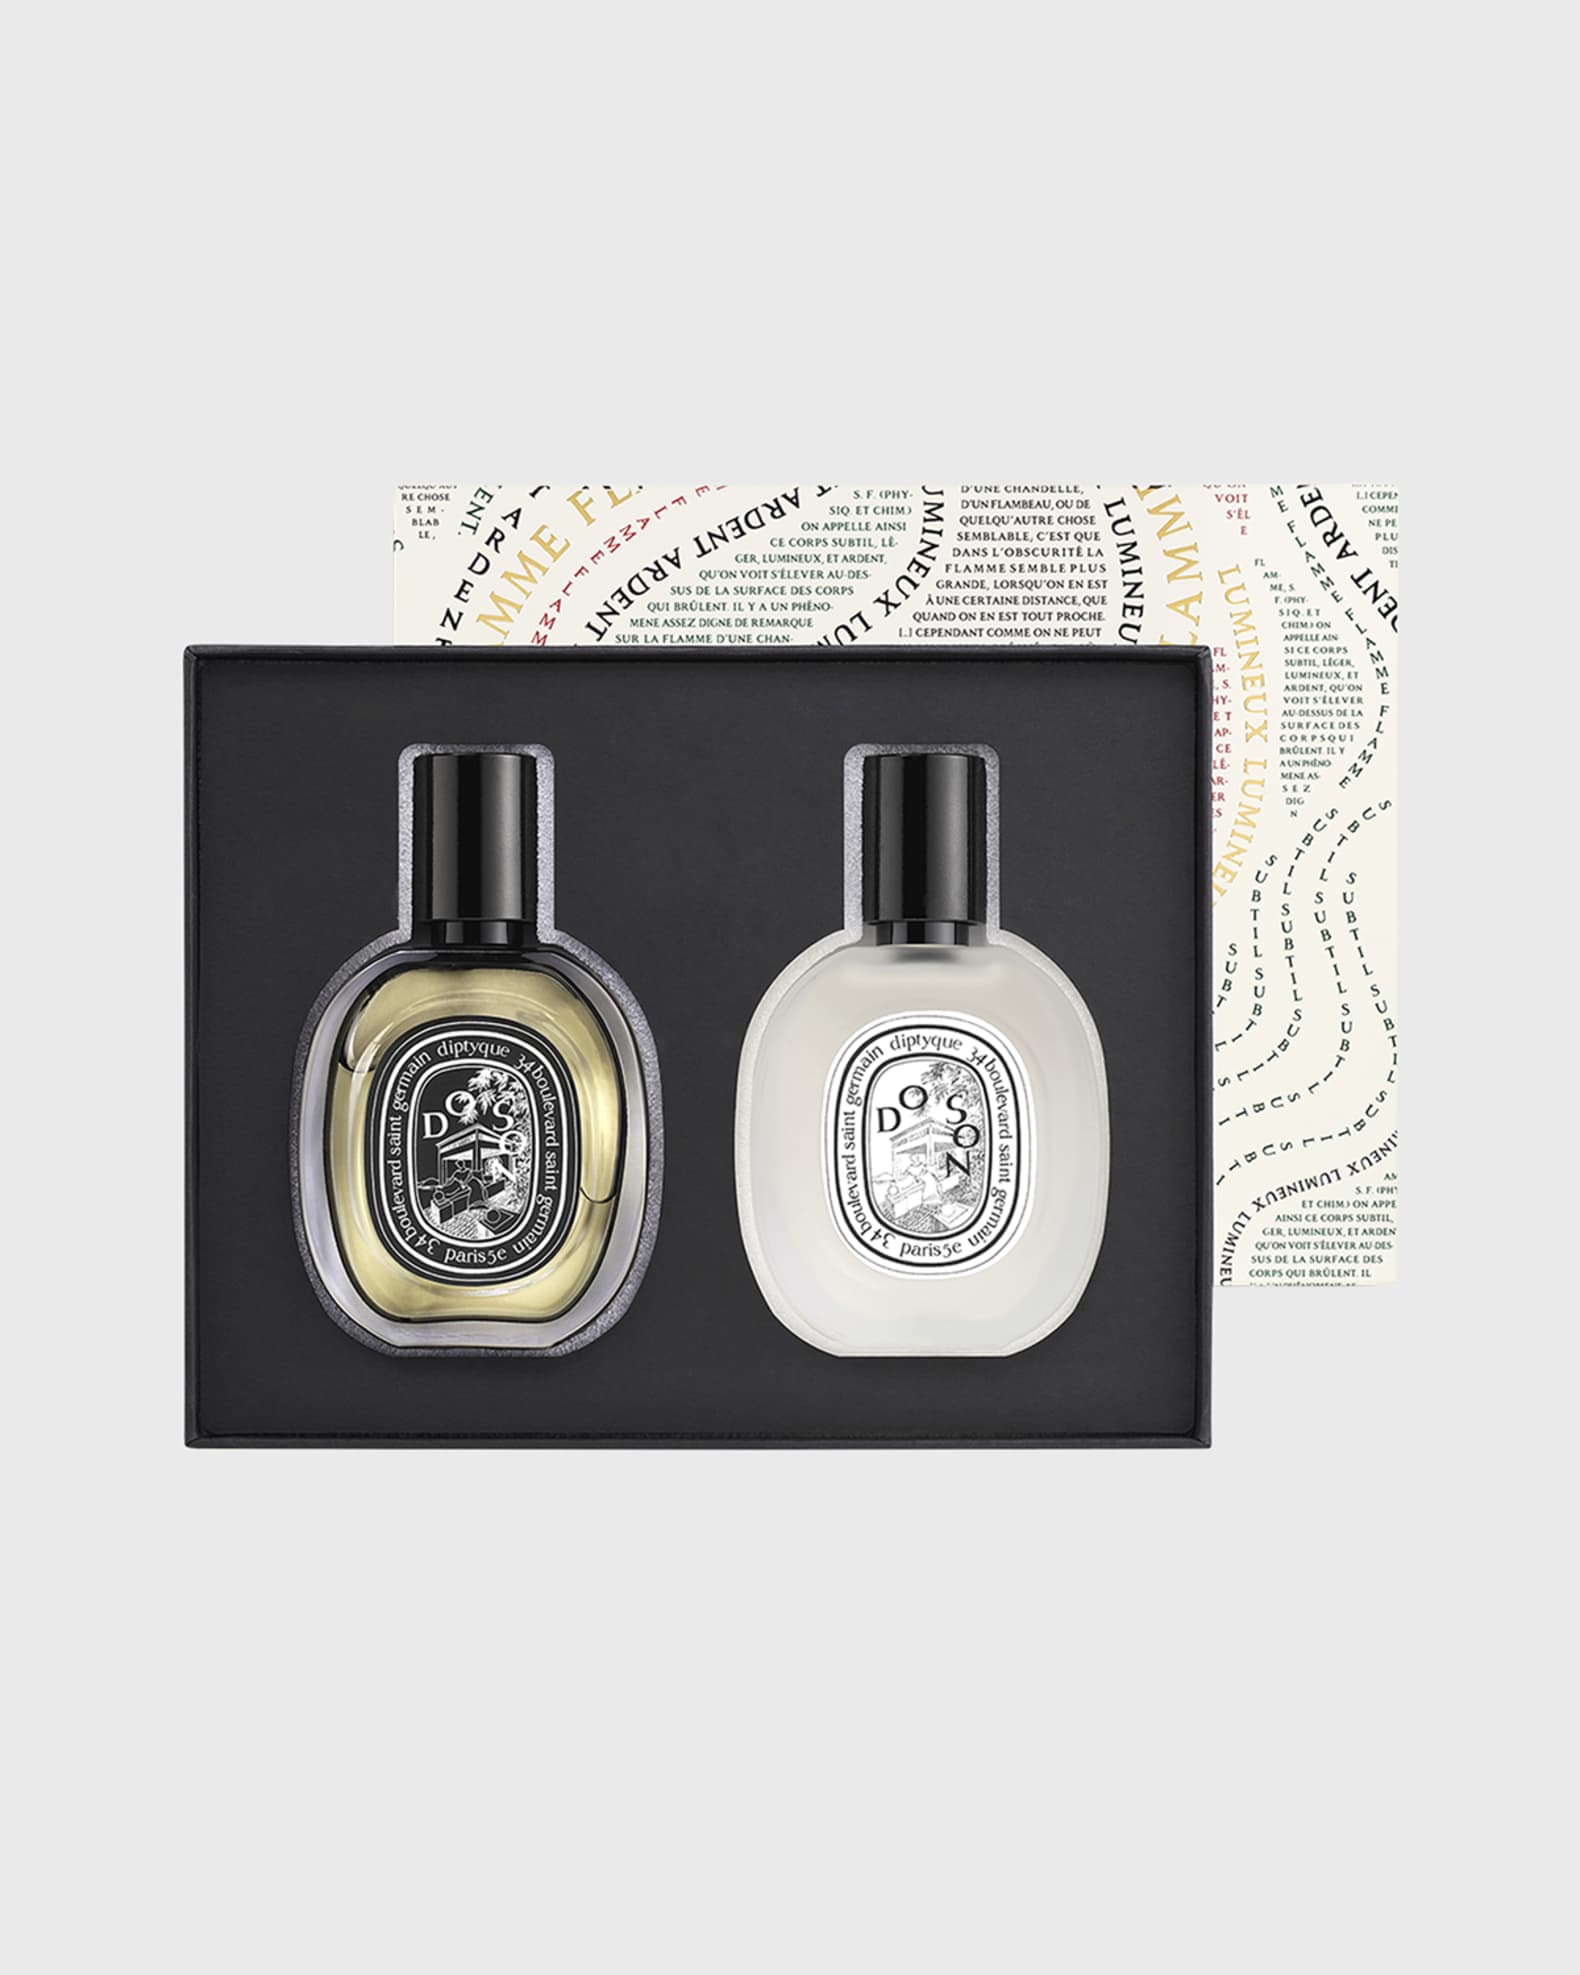 Top 5 CHANEL Perfume Fragrances - AnnMarie John